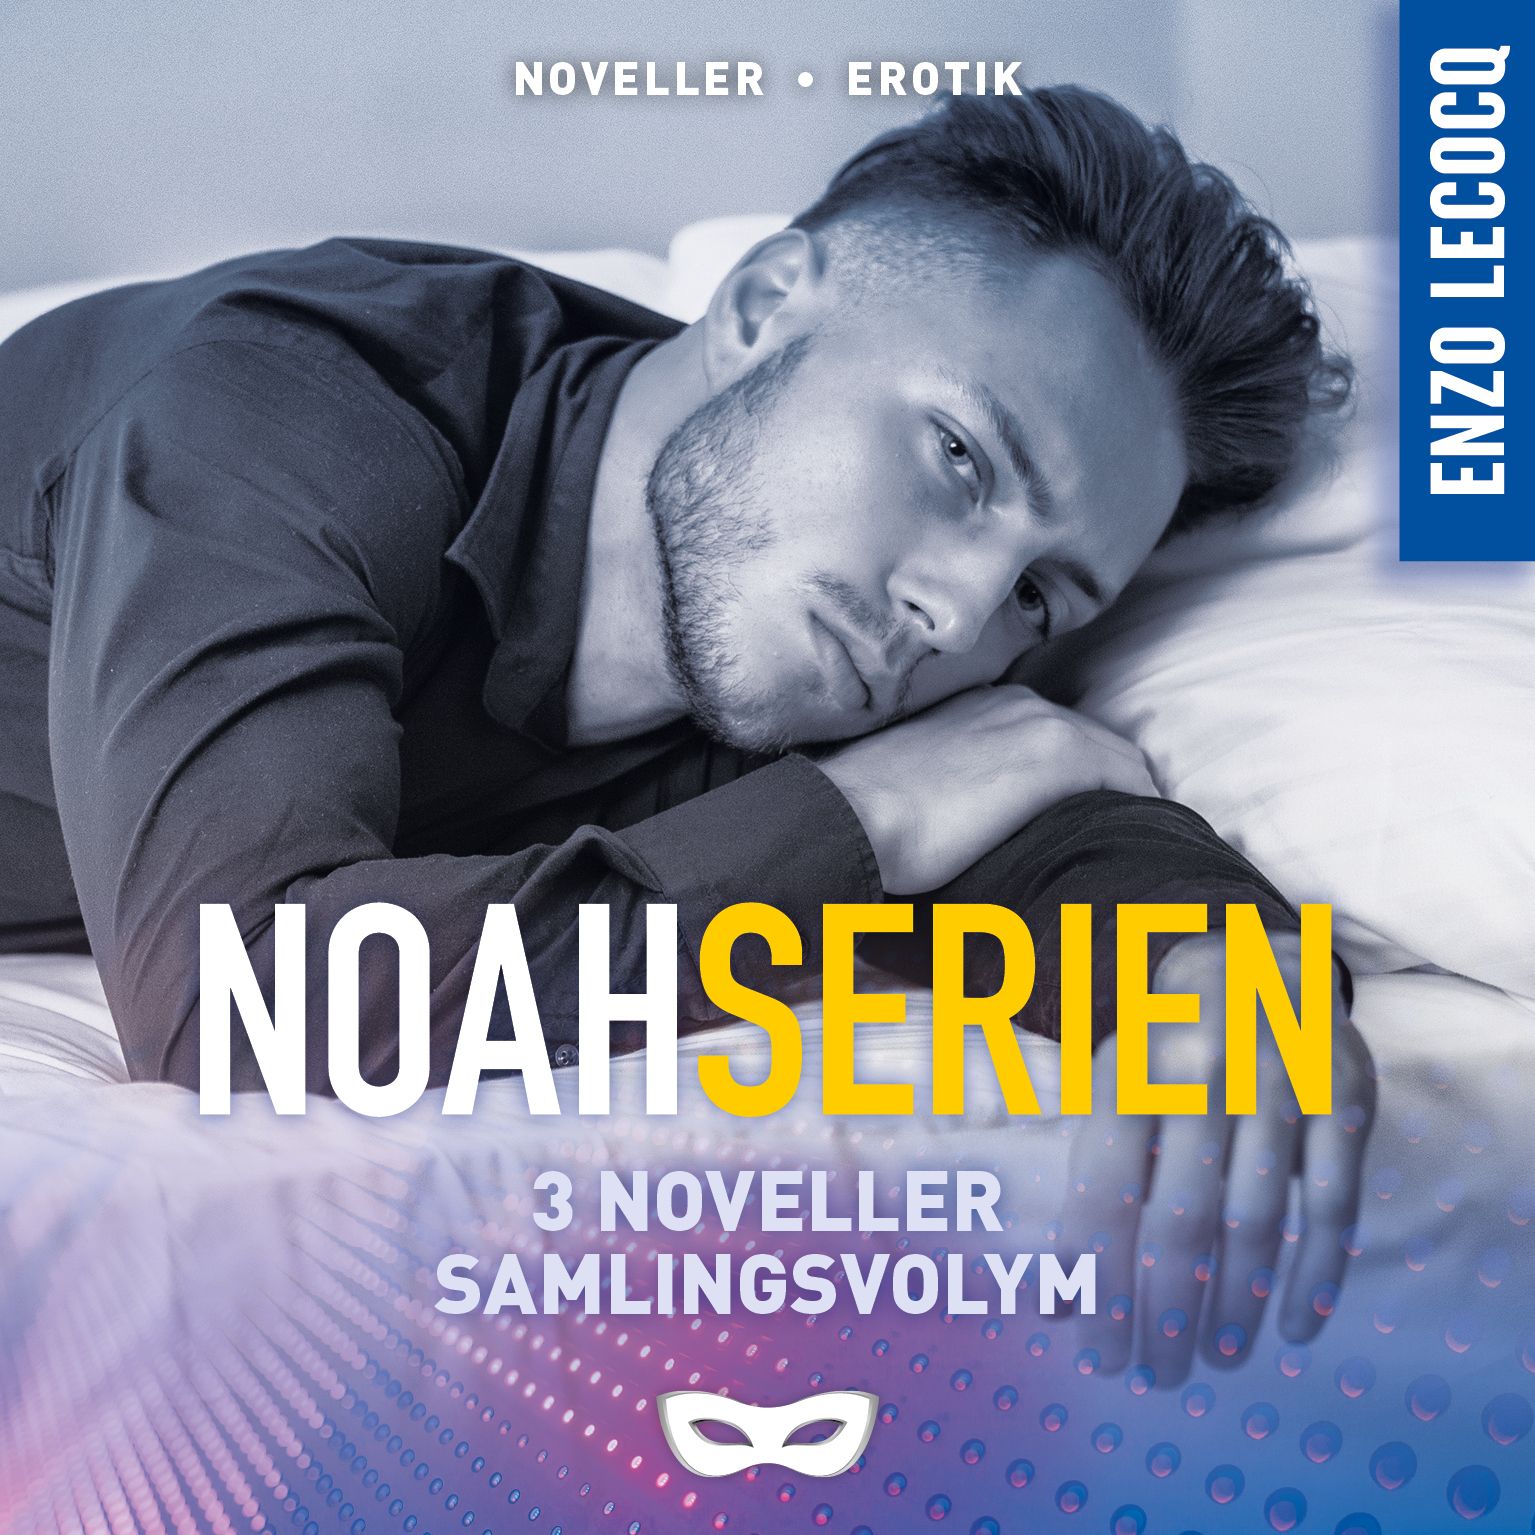 Enzo Lecocq: Noahserien 3 noveller Samlingsvolym, audiobook by Enzo Lecocq